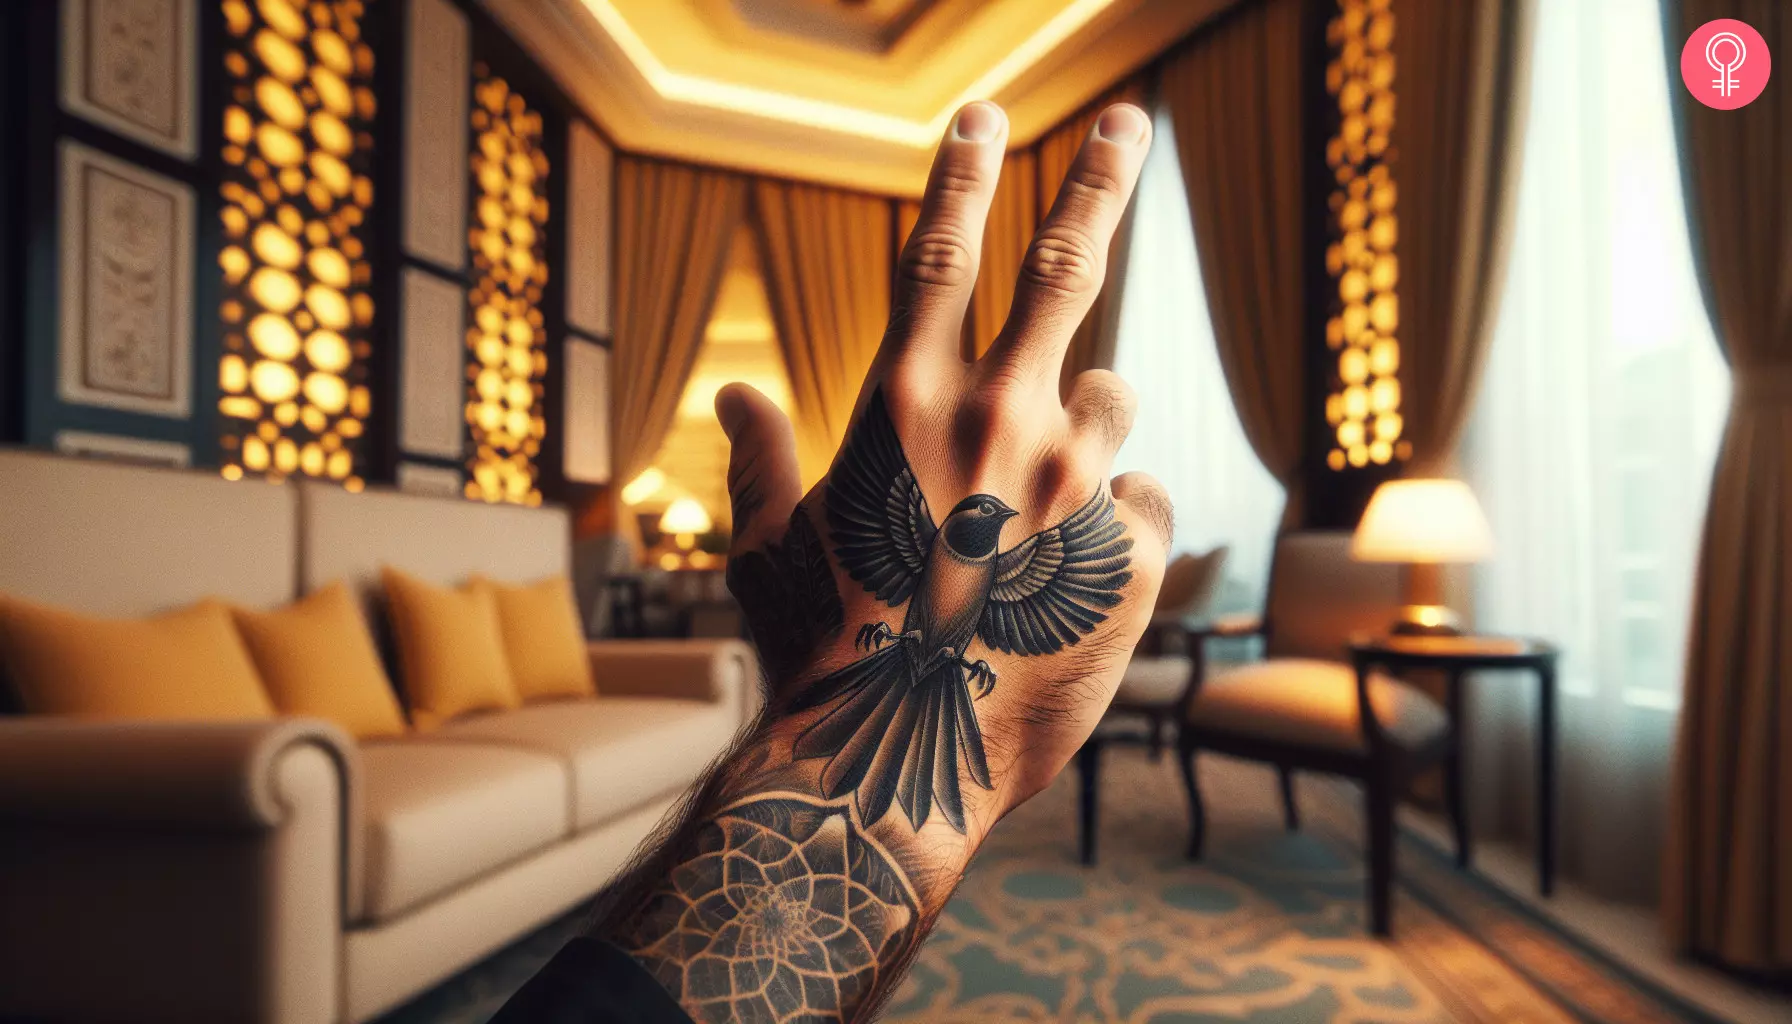 Bird tattoo on the hand of a man